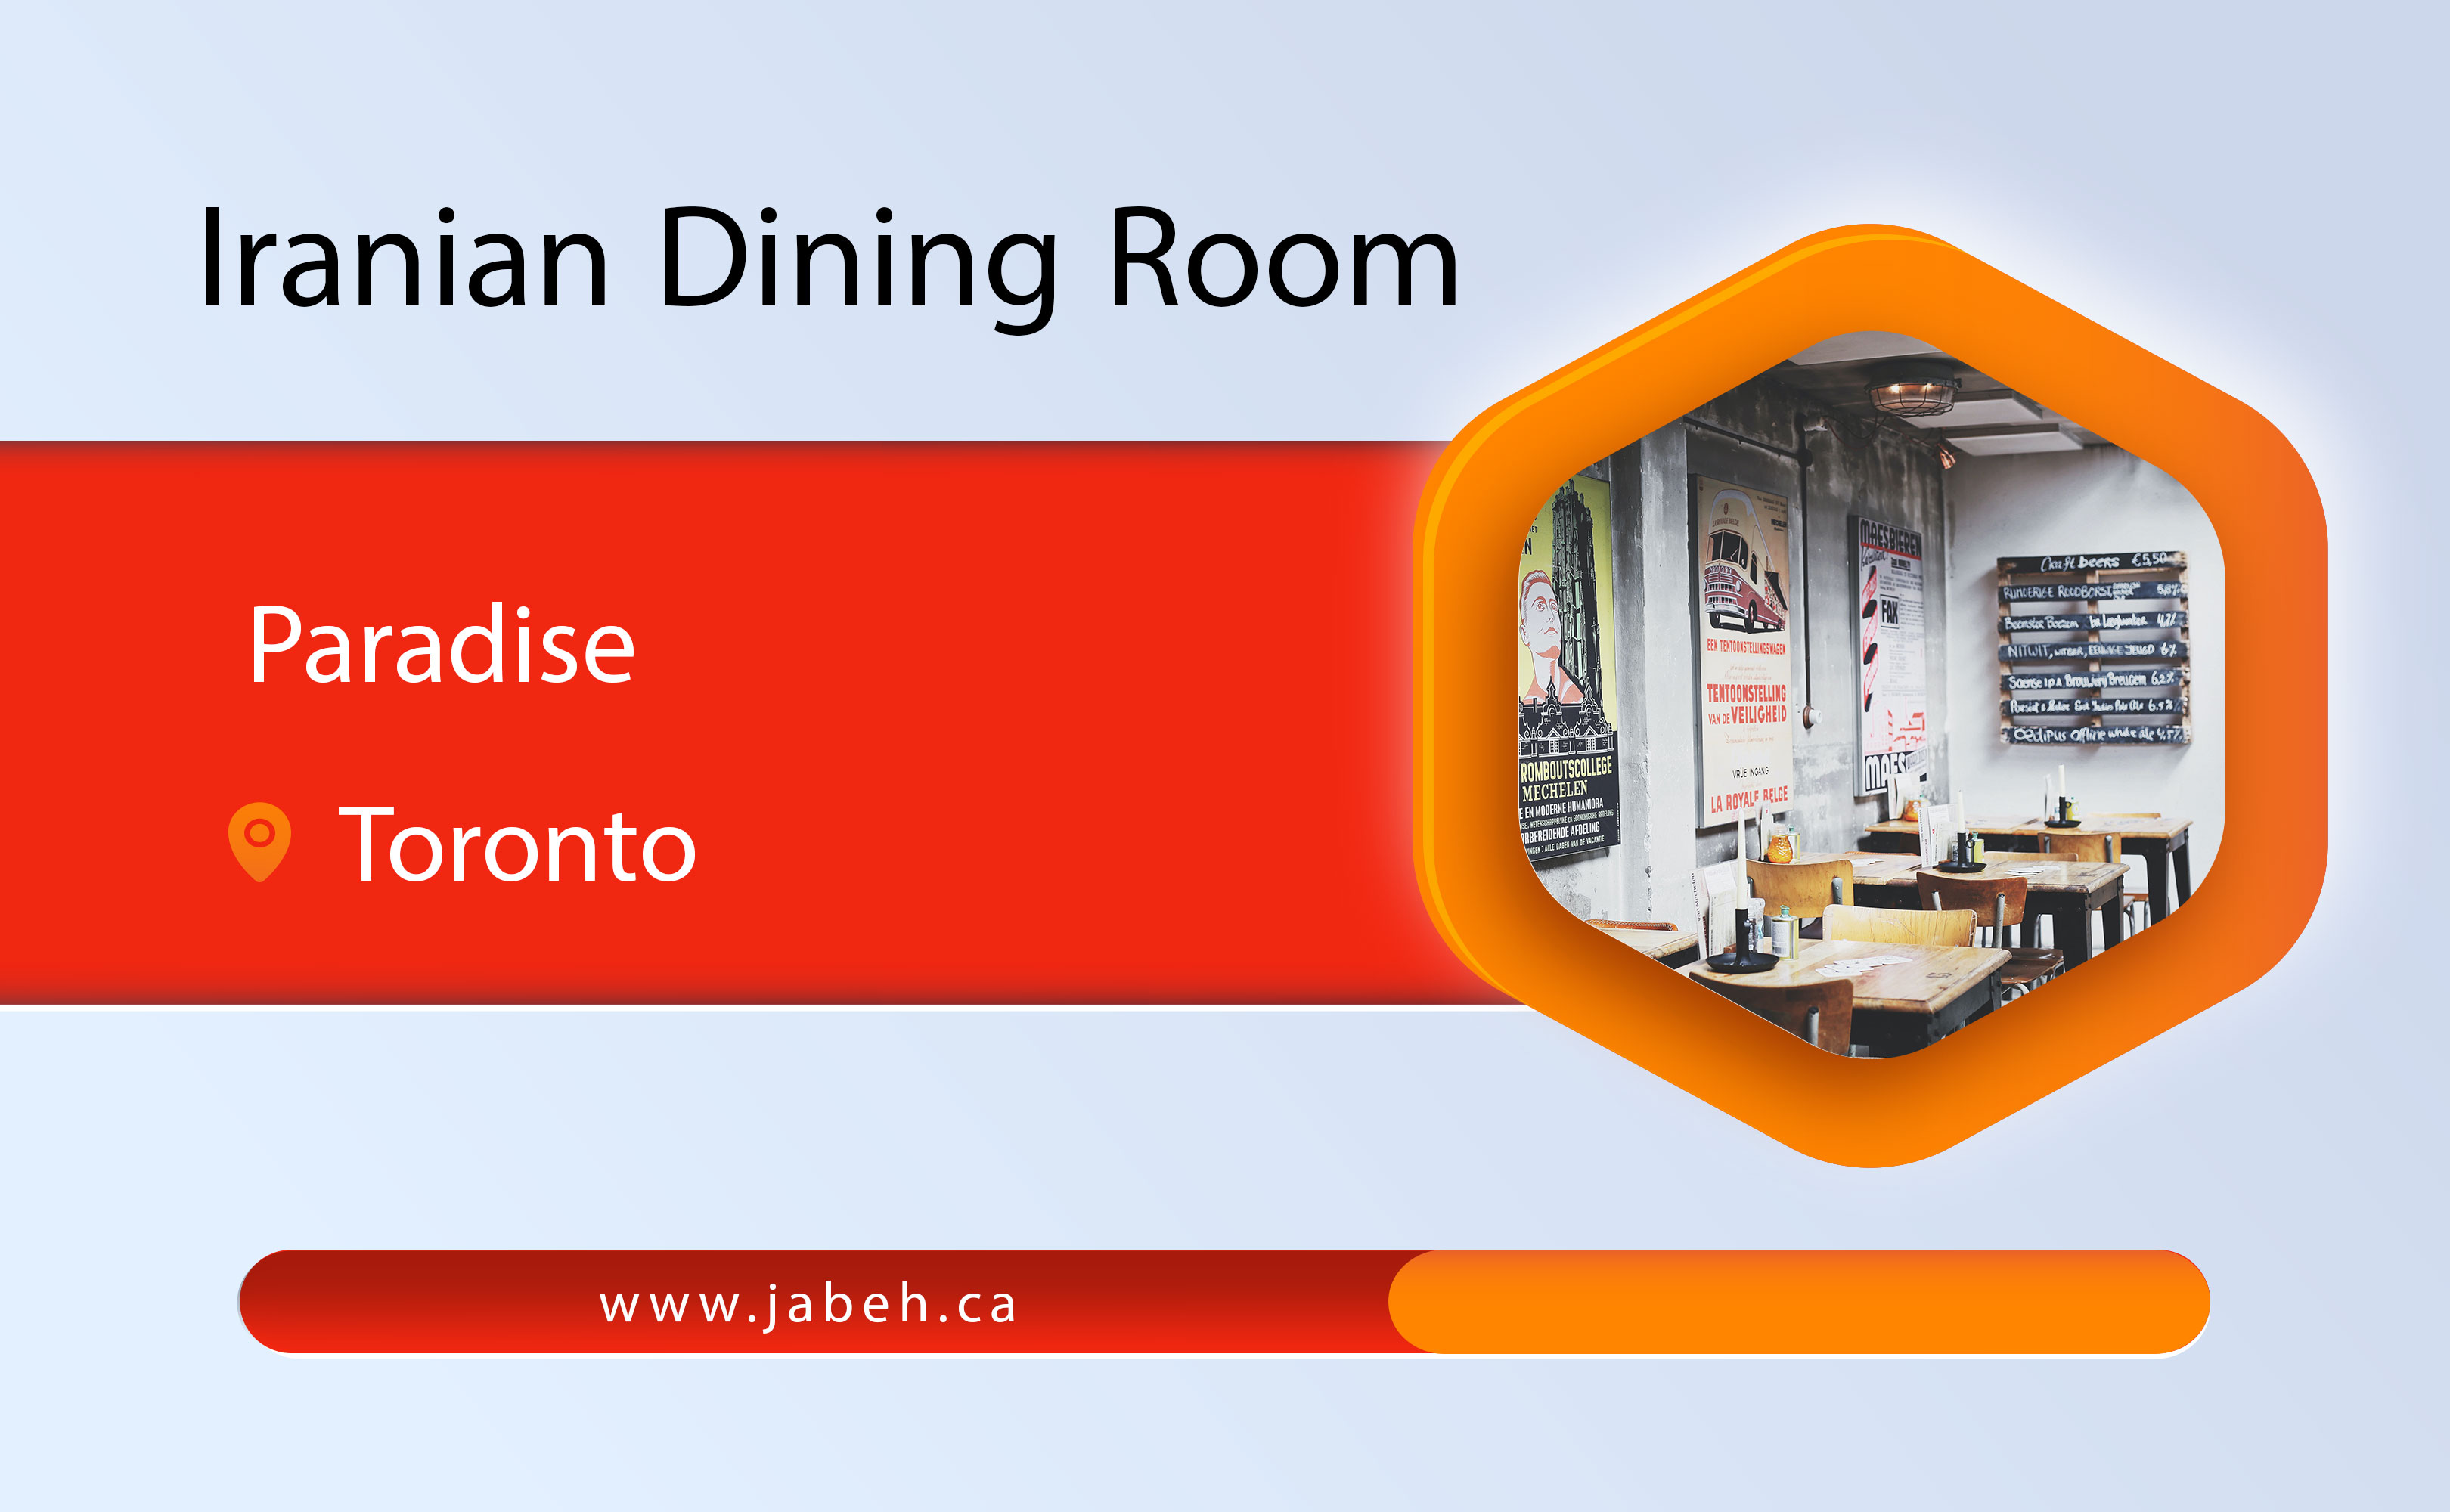 Behesht Iranian dining room in Toronto